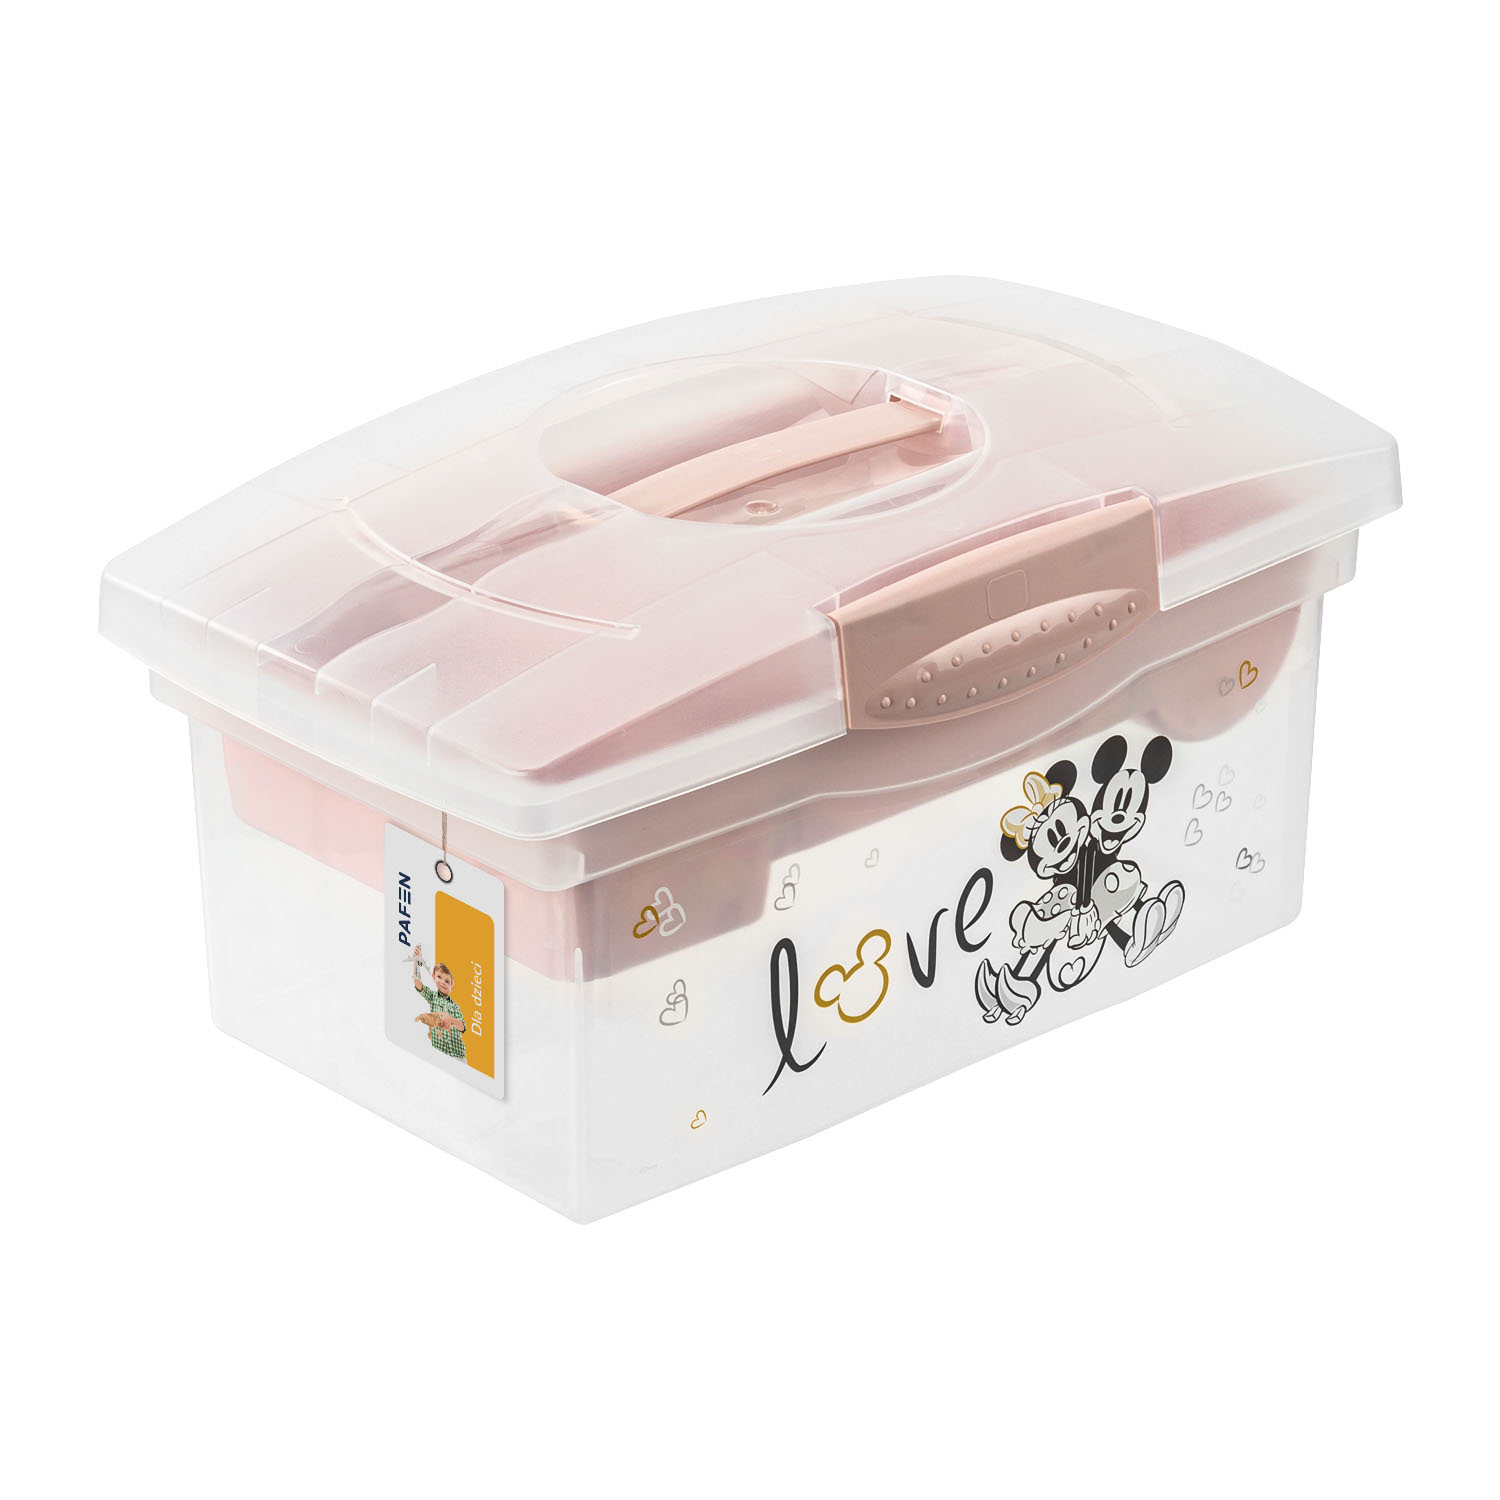 Patrick Nordic pink toy box